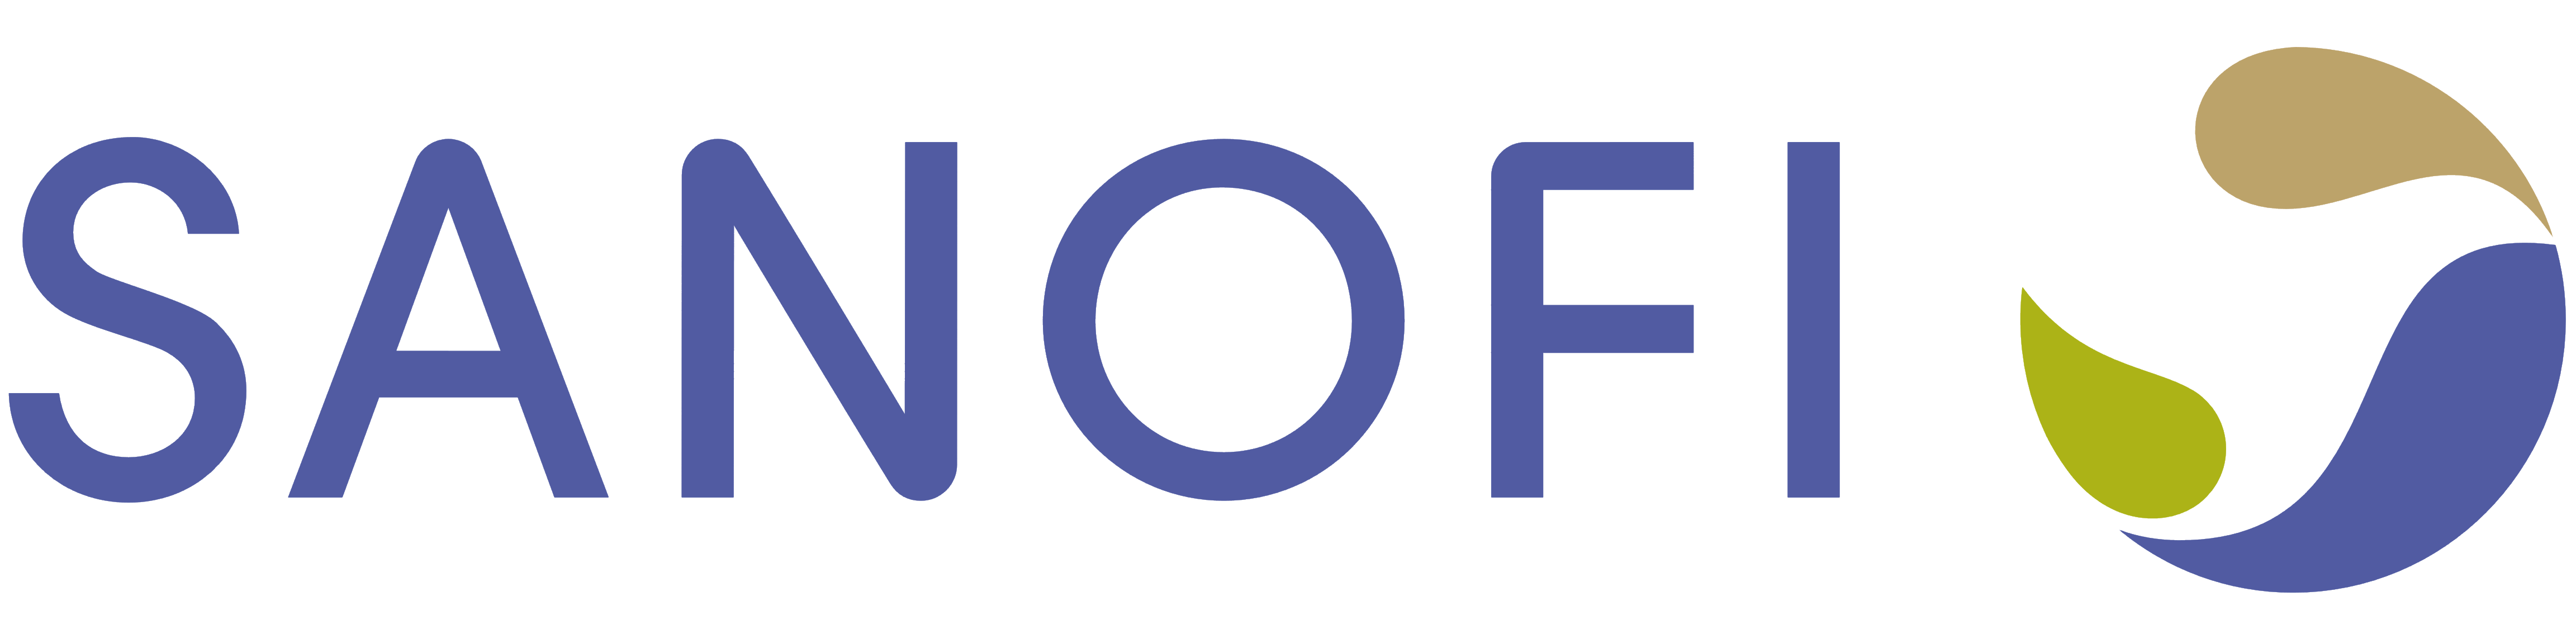 Sanofi logo, logotype